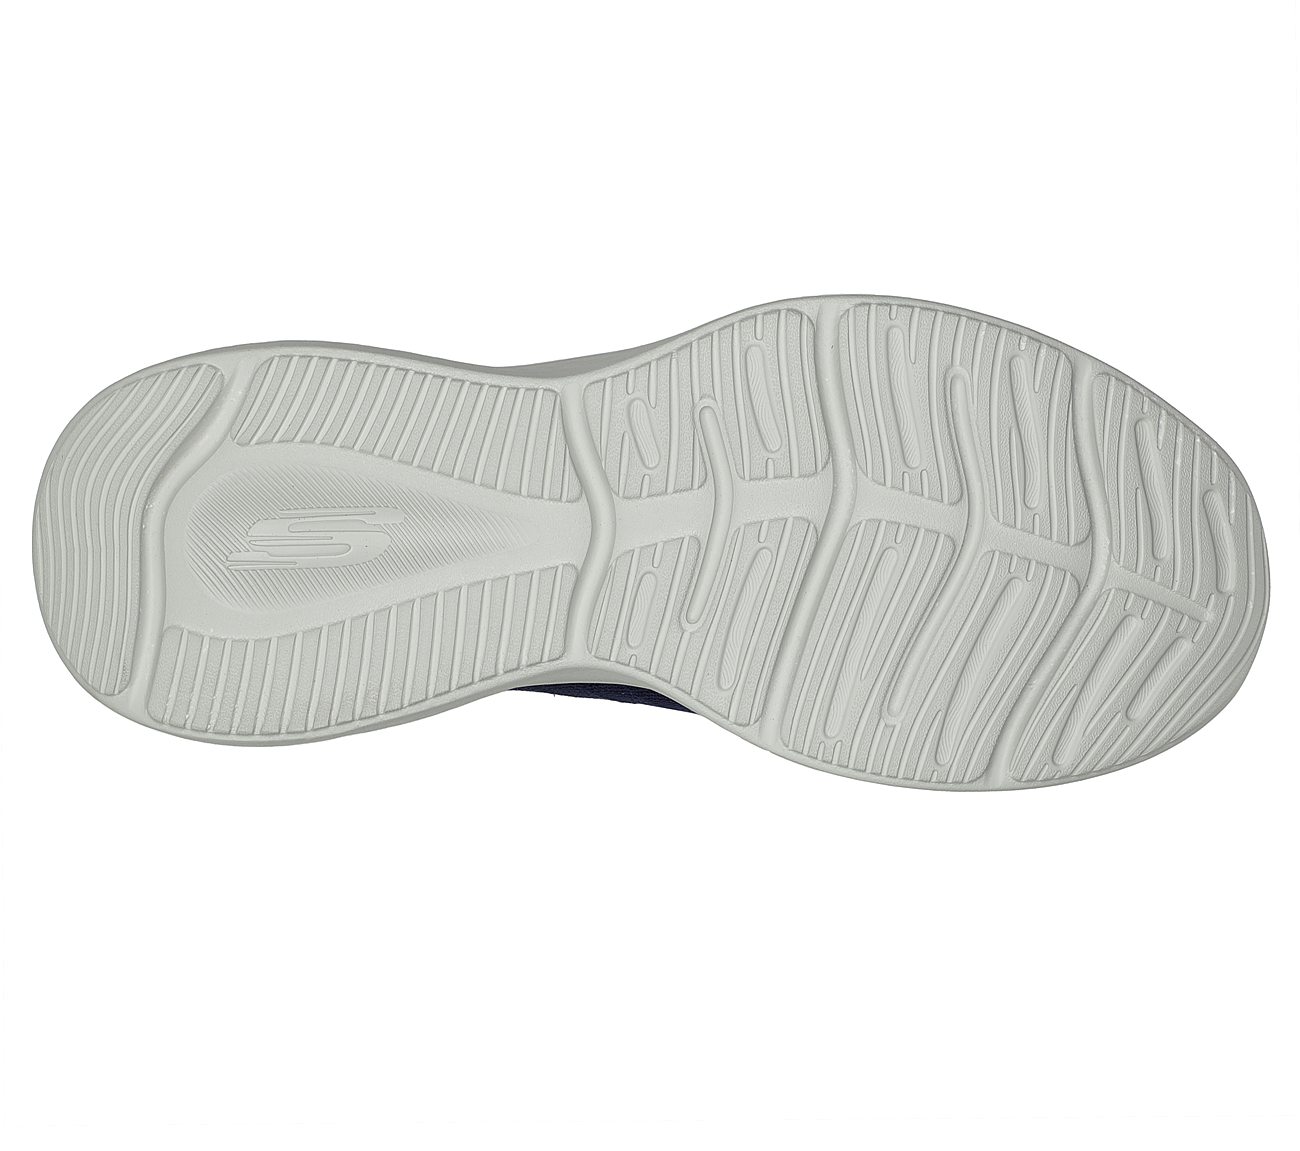 SKECH-LITE PRO - FAINT FLAIR, NAVY/LIME Footwear Bottom View